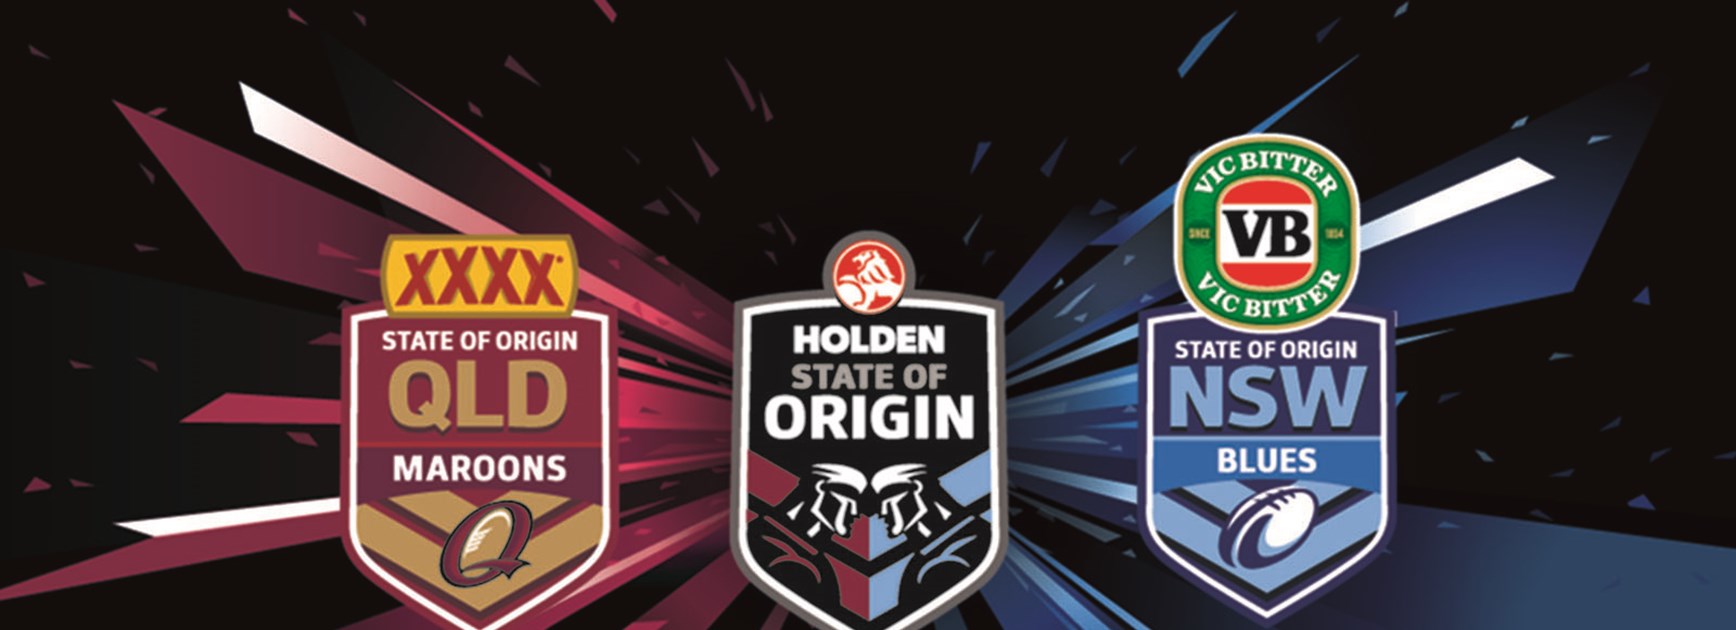 Holden State of Origin Series 2015.